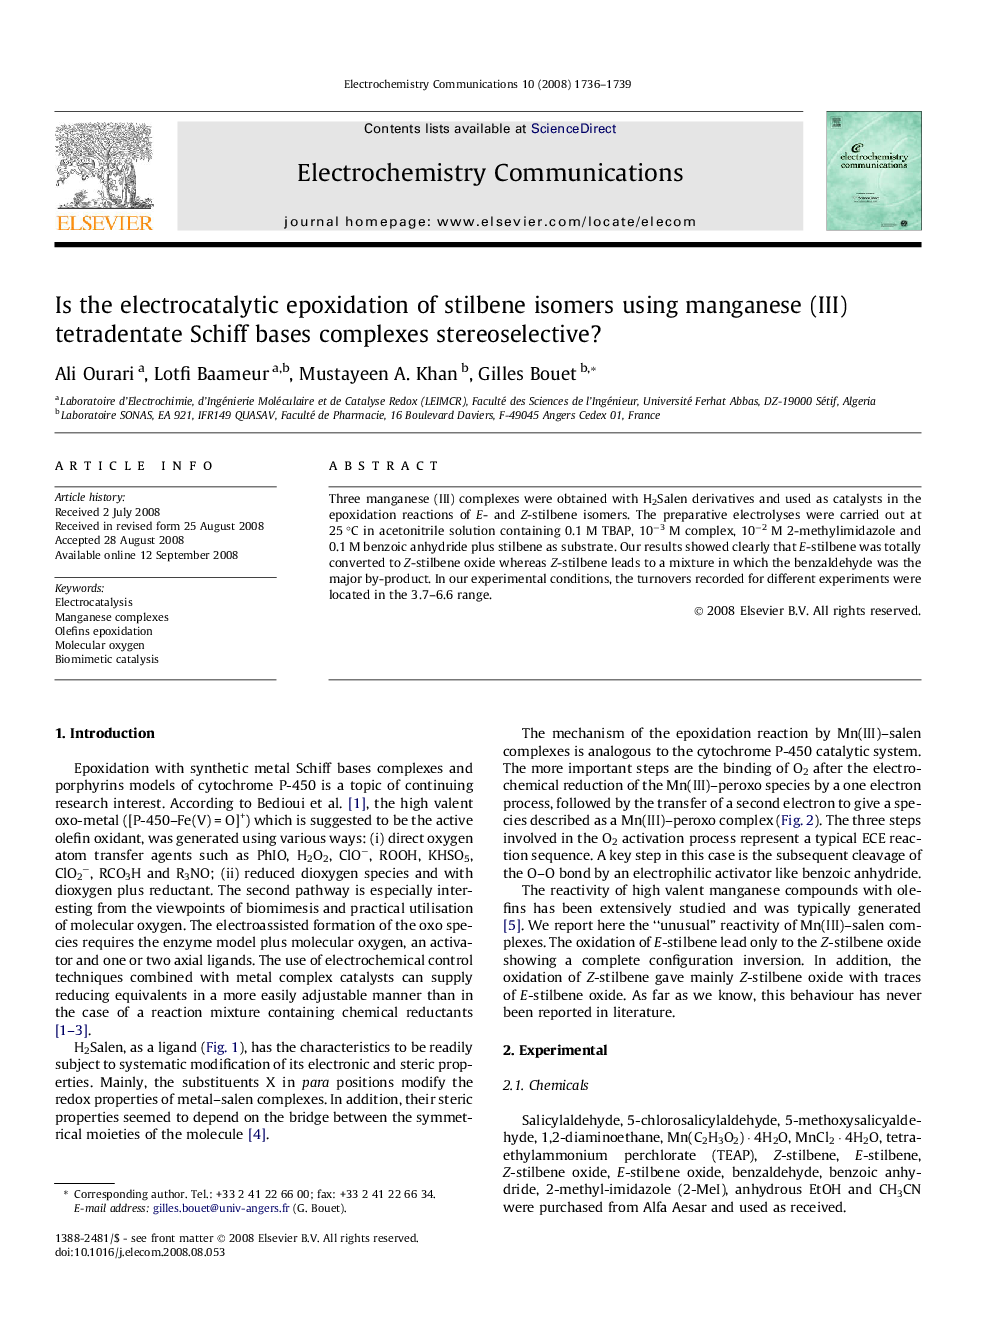 Is the electrocatalytic epoxidation of stilbene isomers using manganese (III) tetradentate Schiff bases complexes stereoselective?